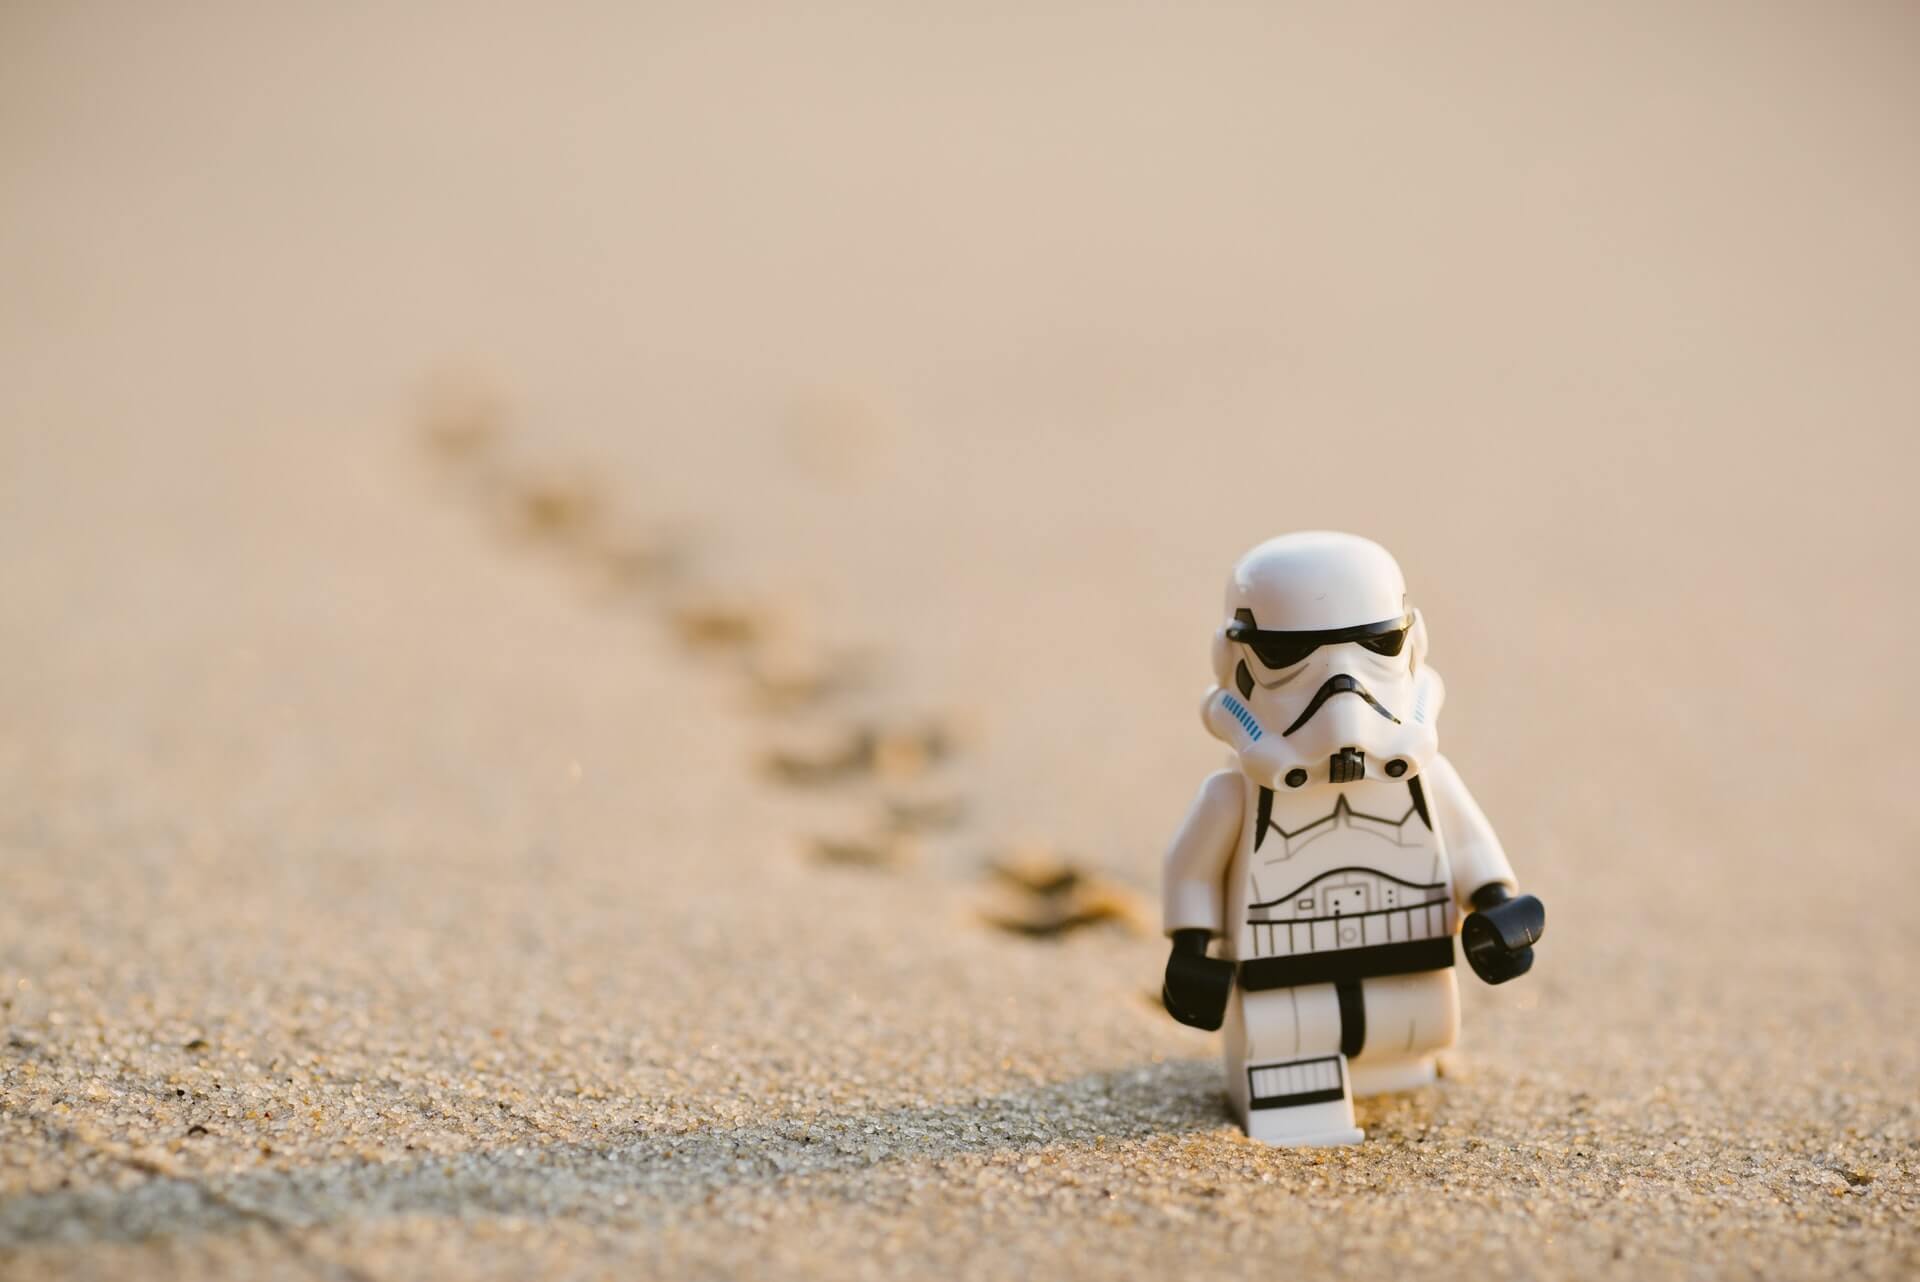 Stormtrooper walking on sand by Daniel Cheung on Unsplash